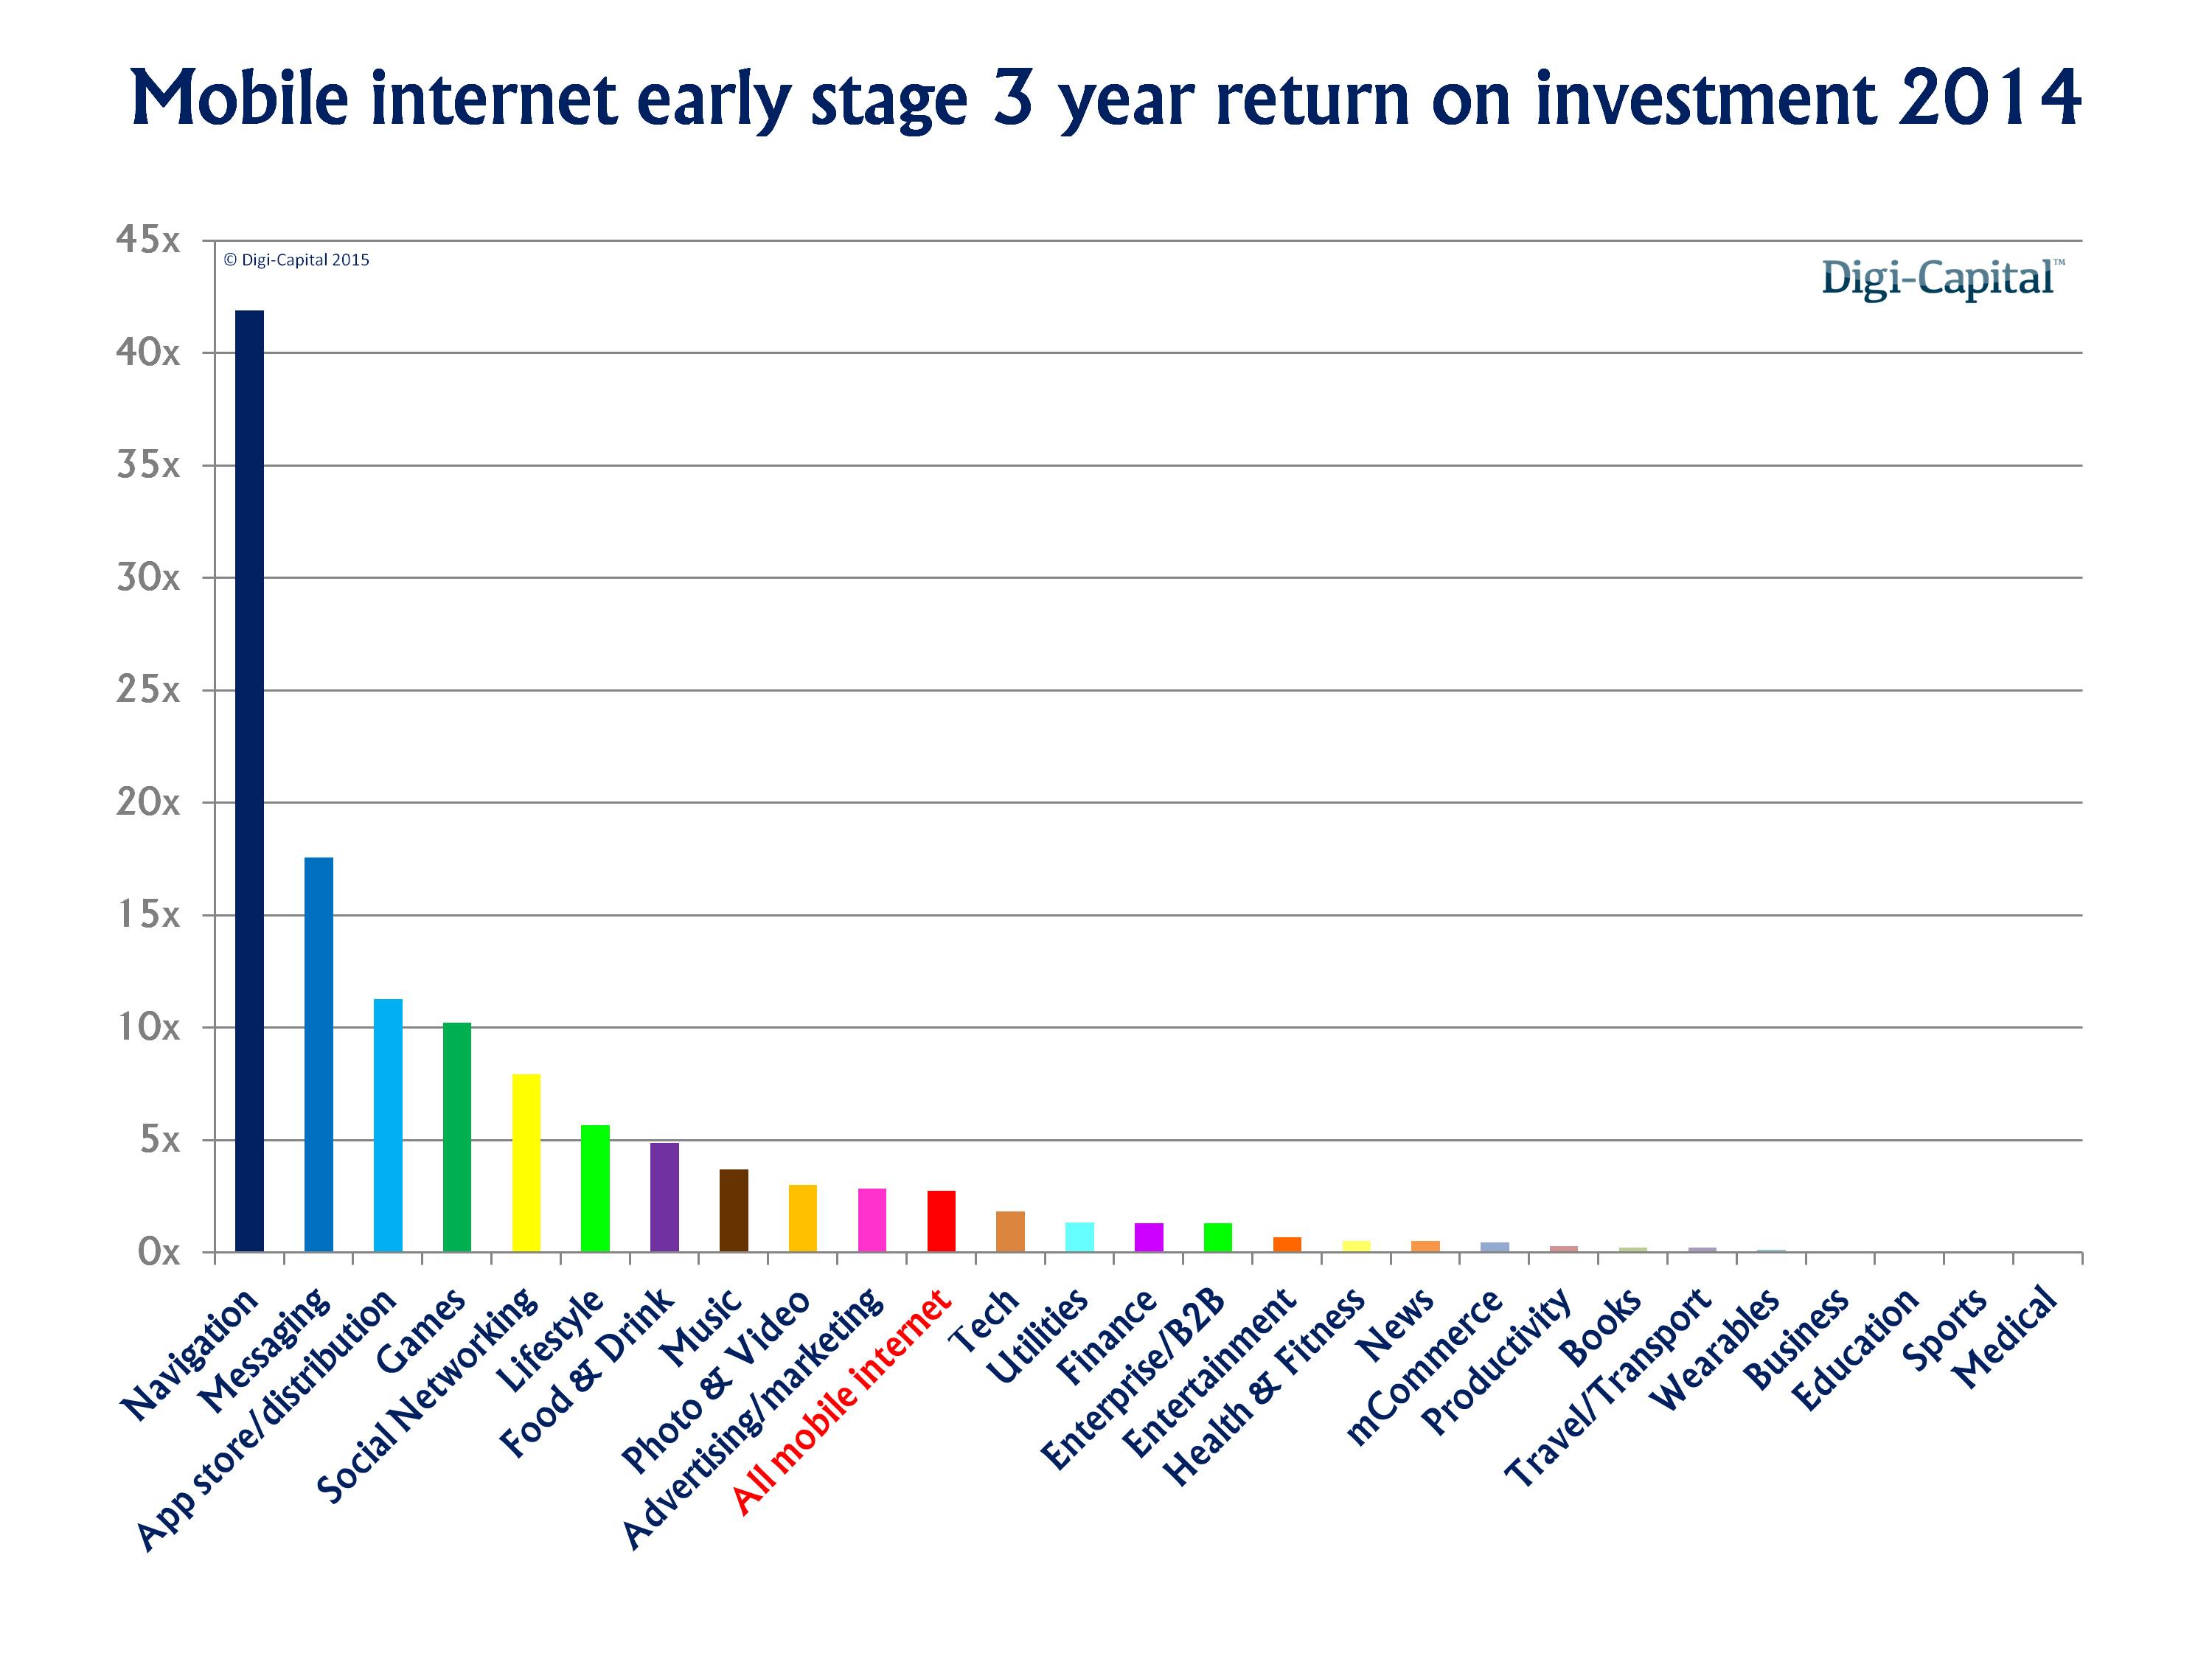 Mobile internet sector return on investment